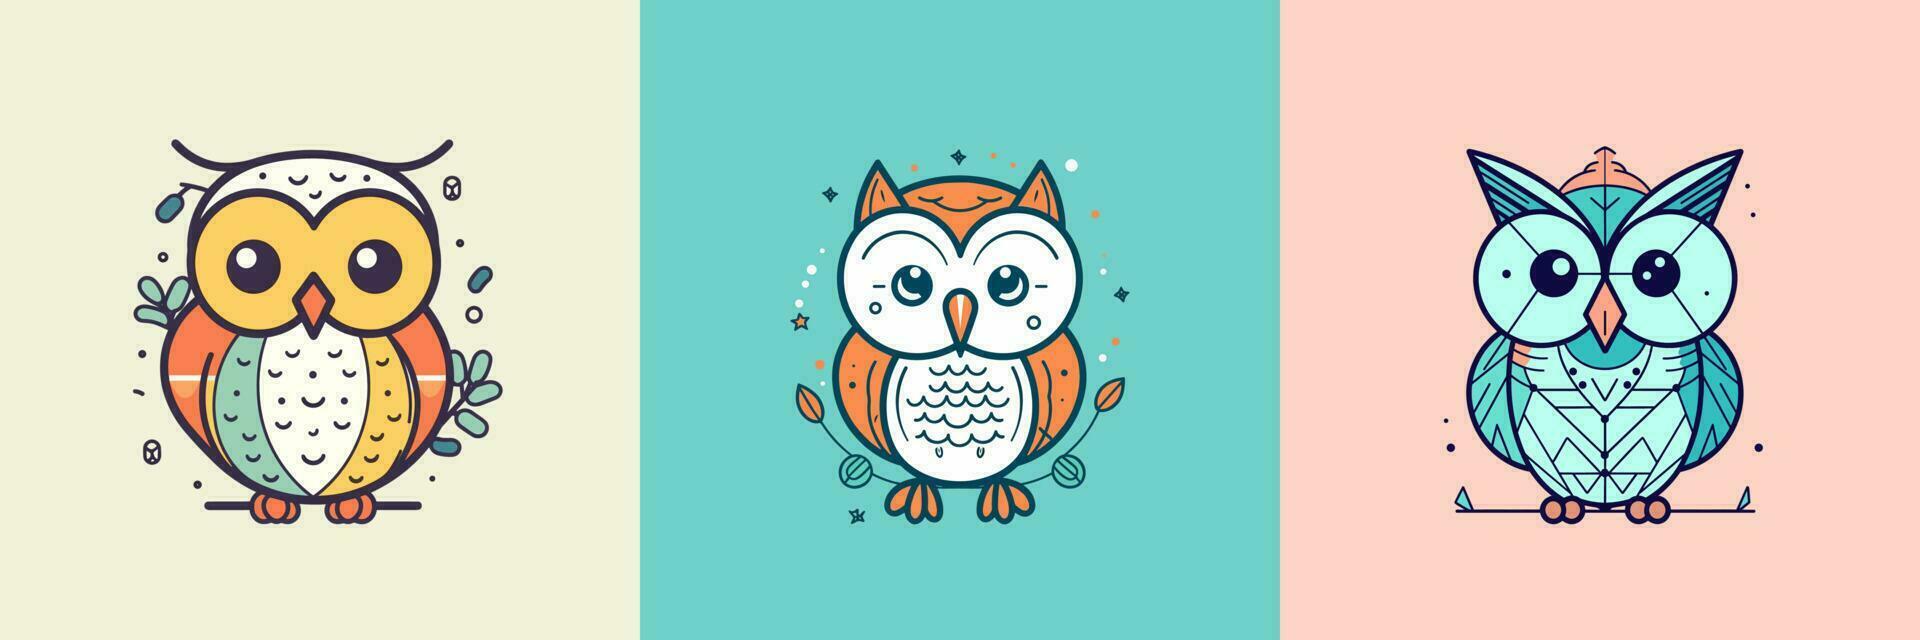 Cute baby owl mascot kawaii cartoon bird illustration set collection vector